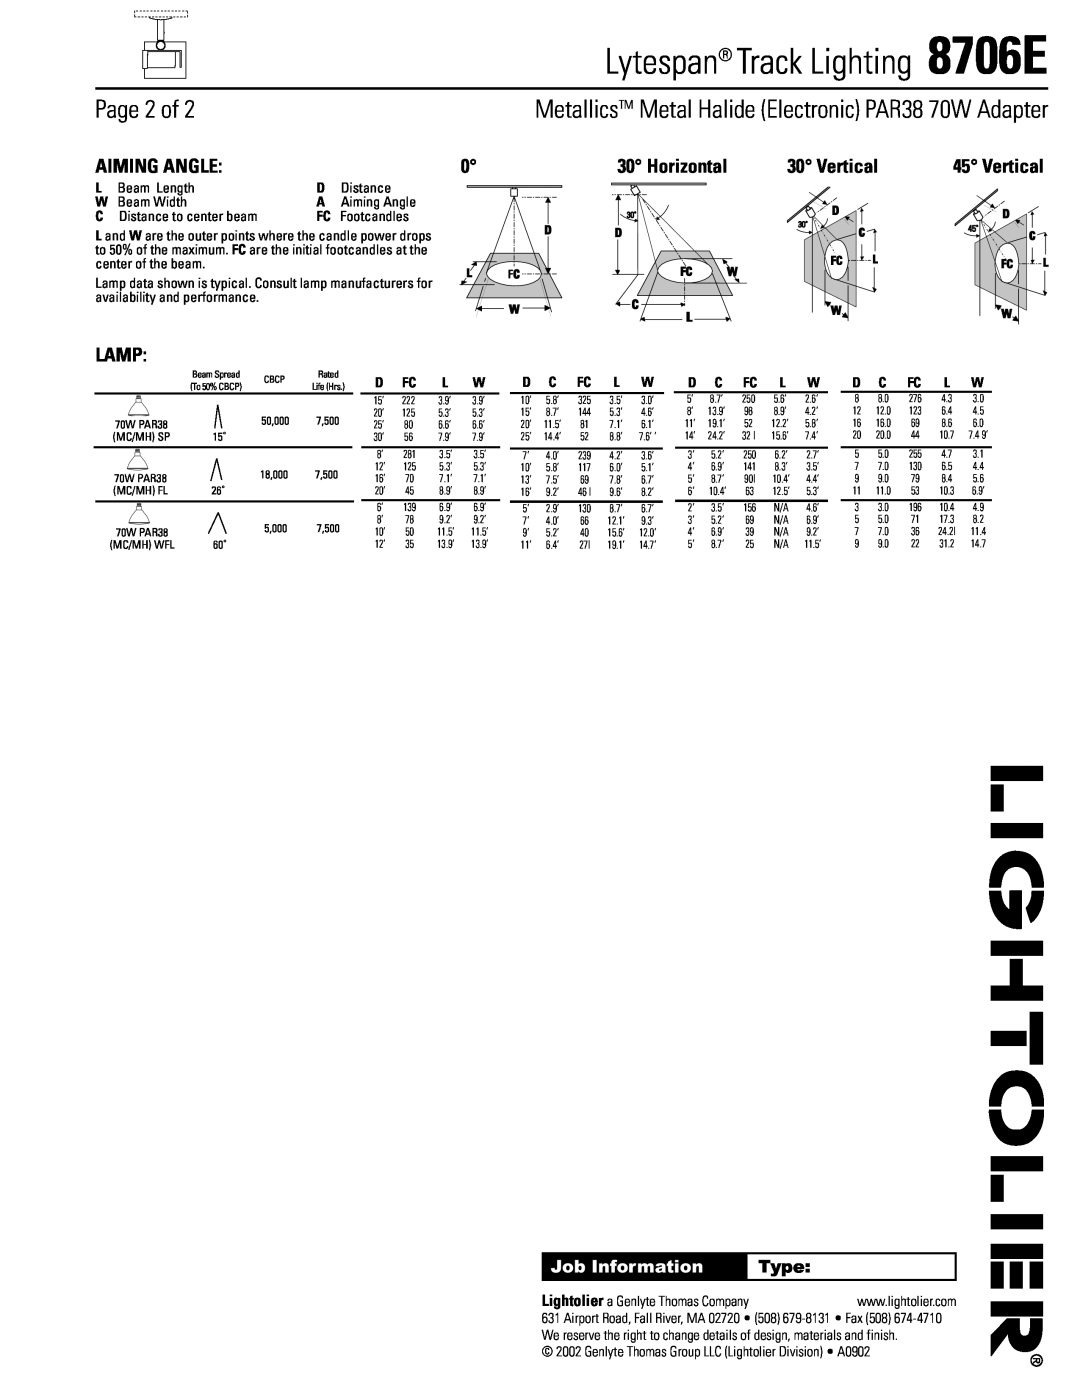 Lightolier 8706E manual Aiming Angle, Horizontal, Vertical, Lamp, Lytespan Track Lighting, Page 2 of, Job Information, Type 